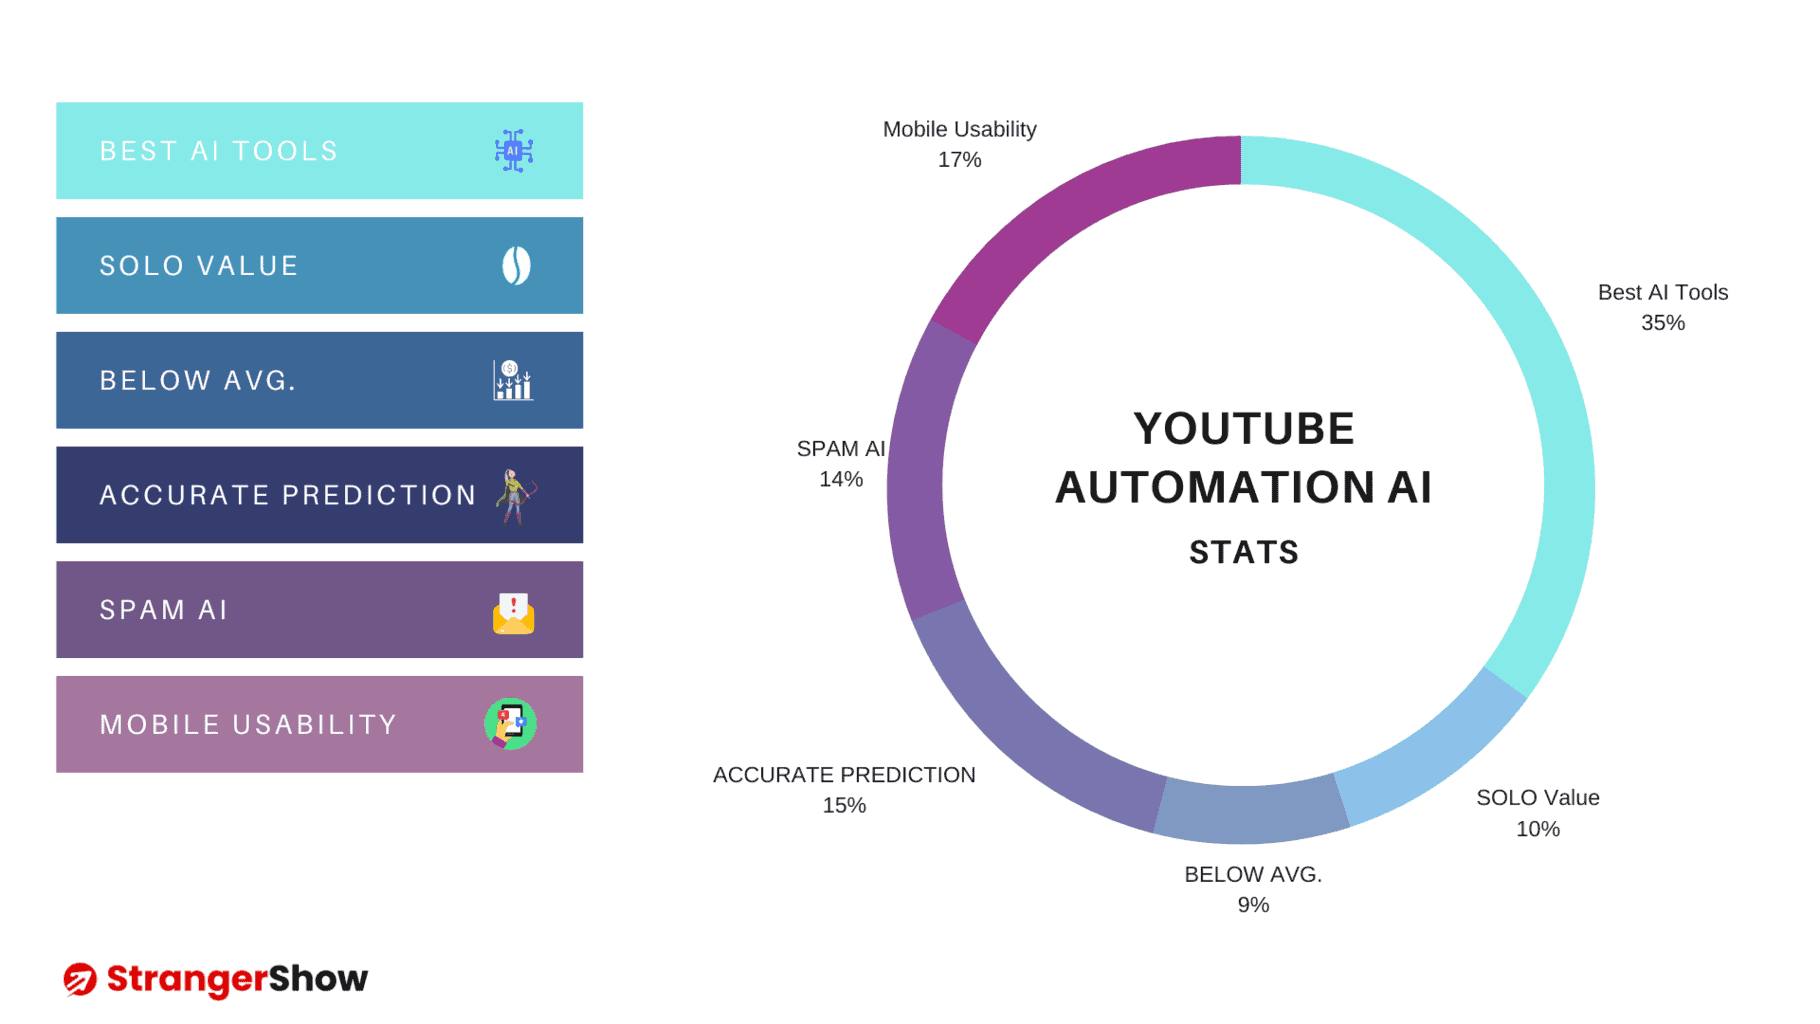 YouTube AUTOMATION AI STATS